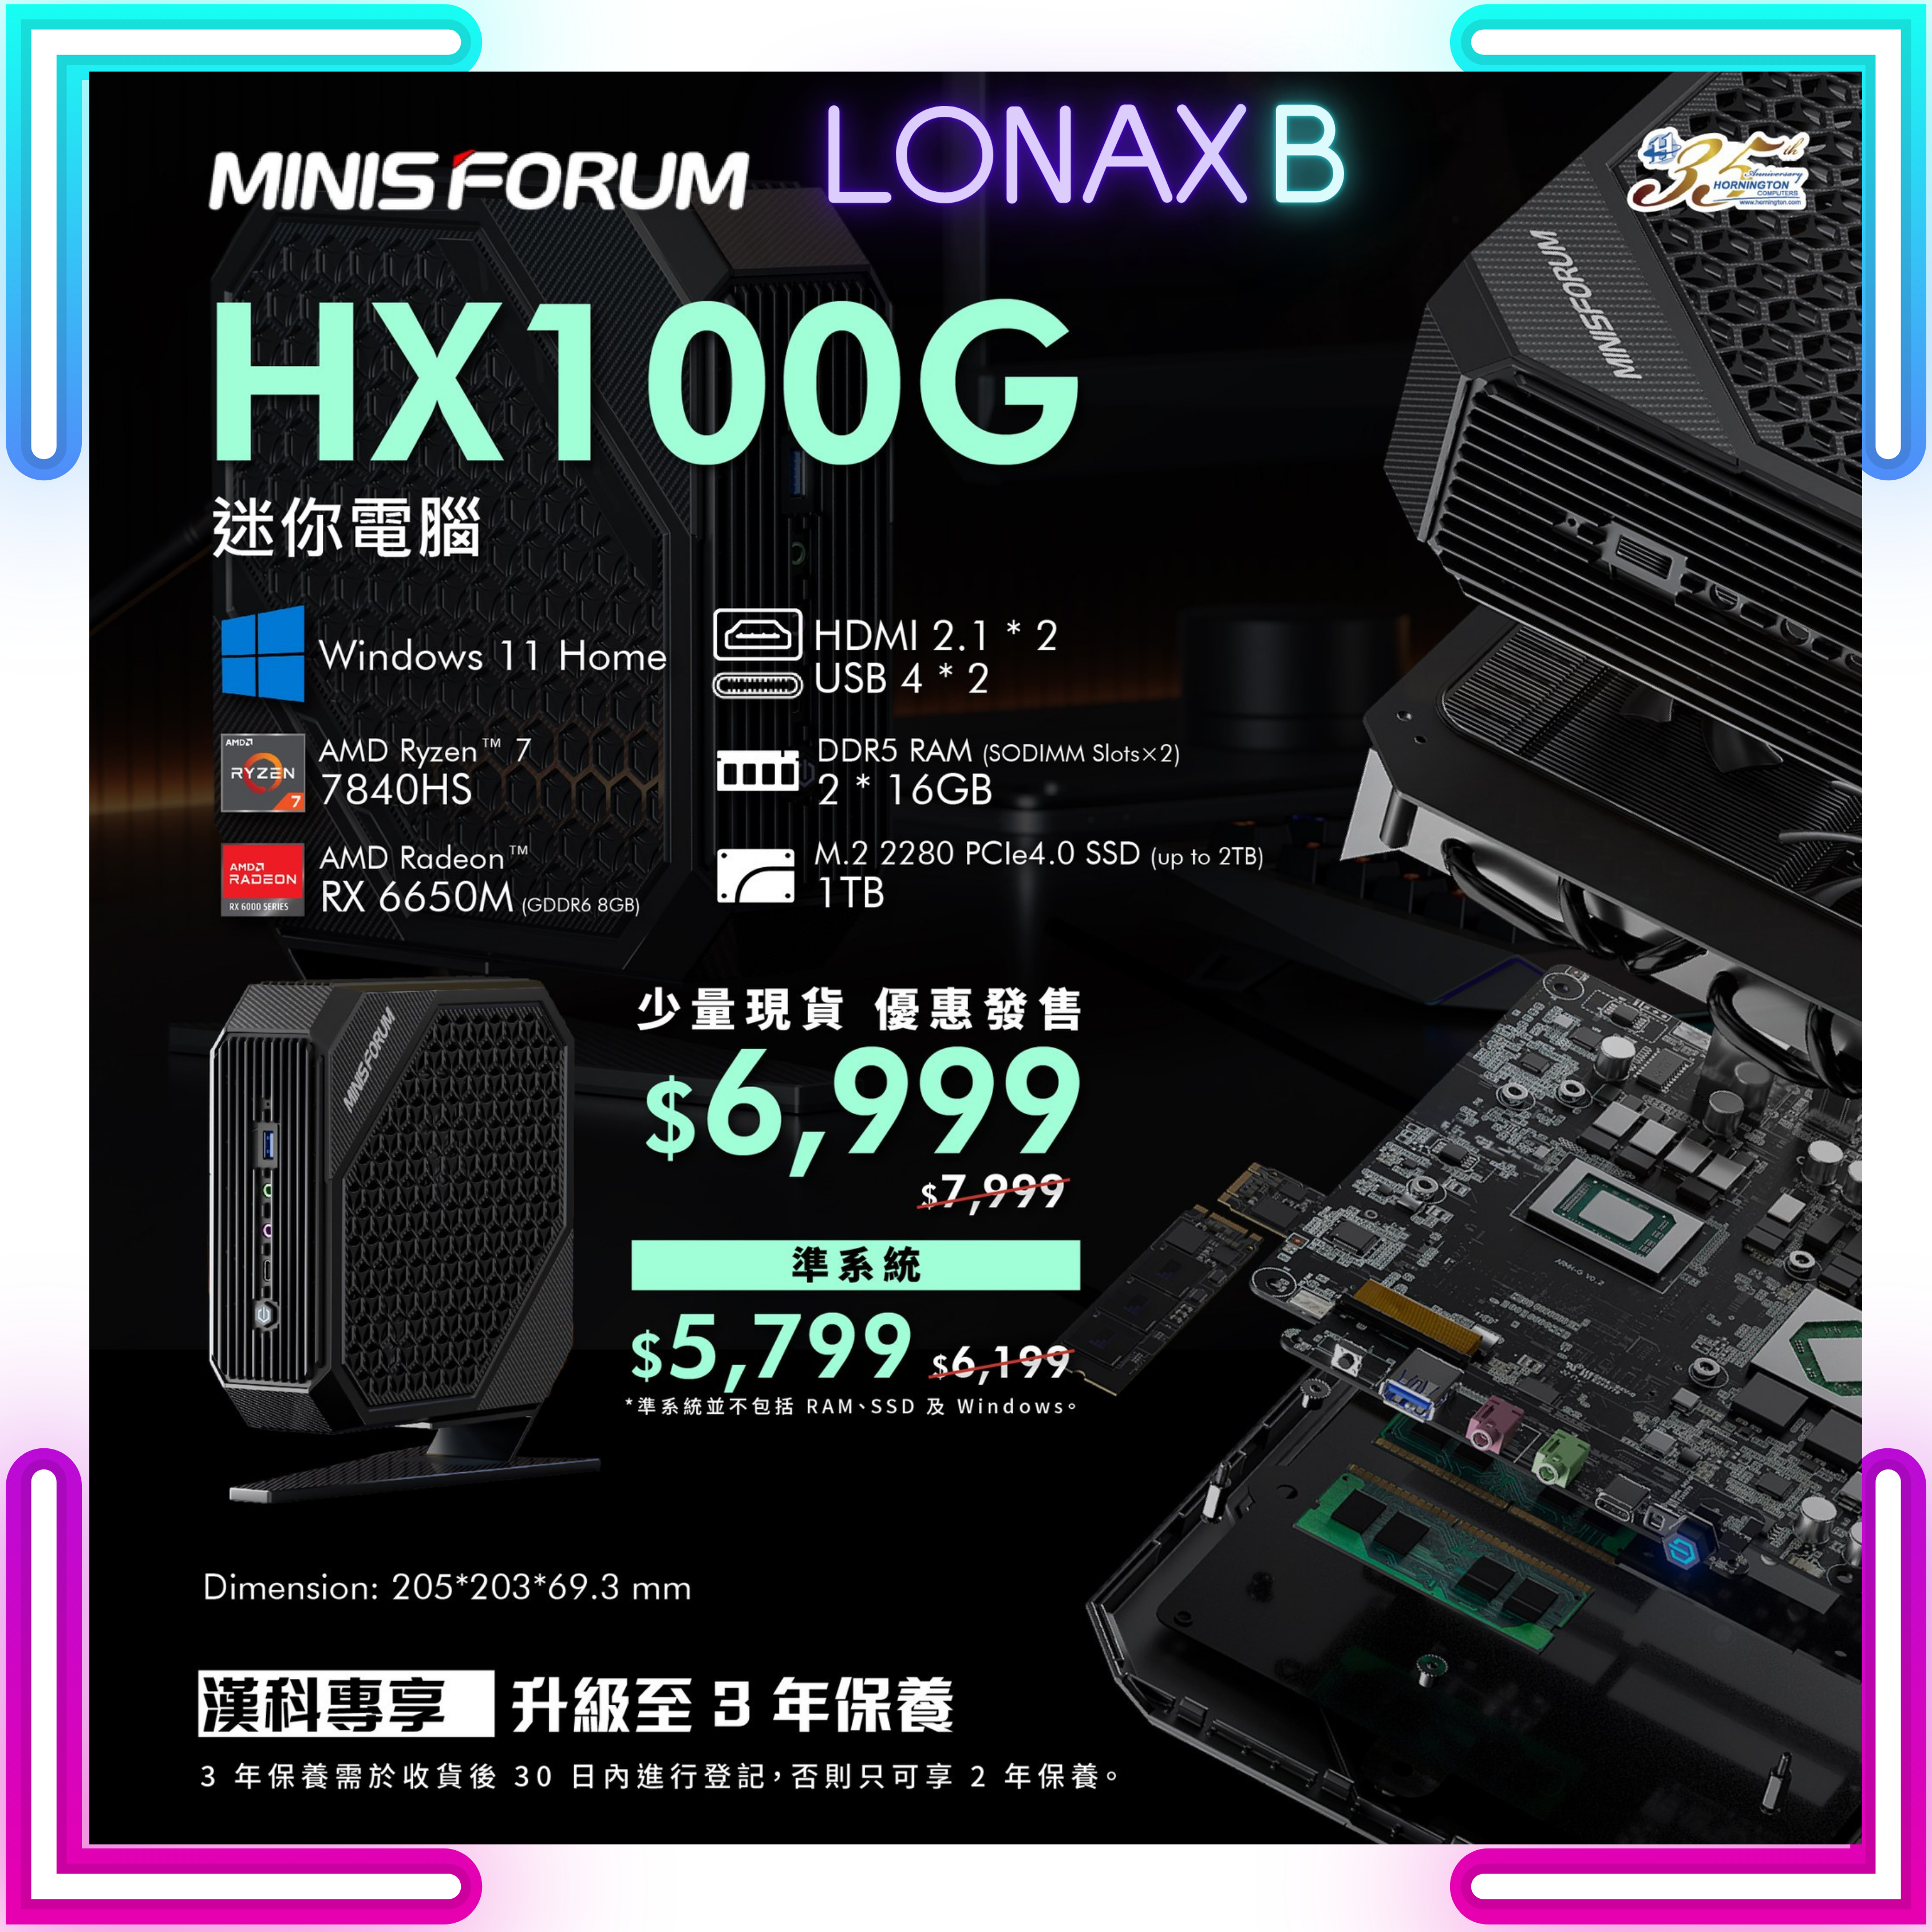 Minisforum HX100G Mini PC 迷你電腦 (Ryzen 7 7840HS、Radeon RX 6650M、32GB DDR5 RAM、1TB SSD、Windows 11 Home)免費升級至3 年保養